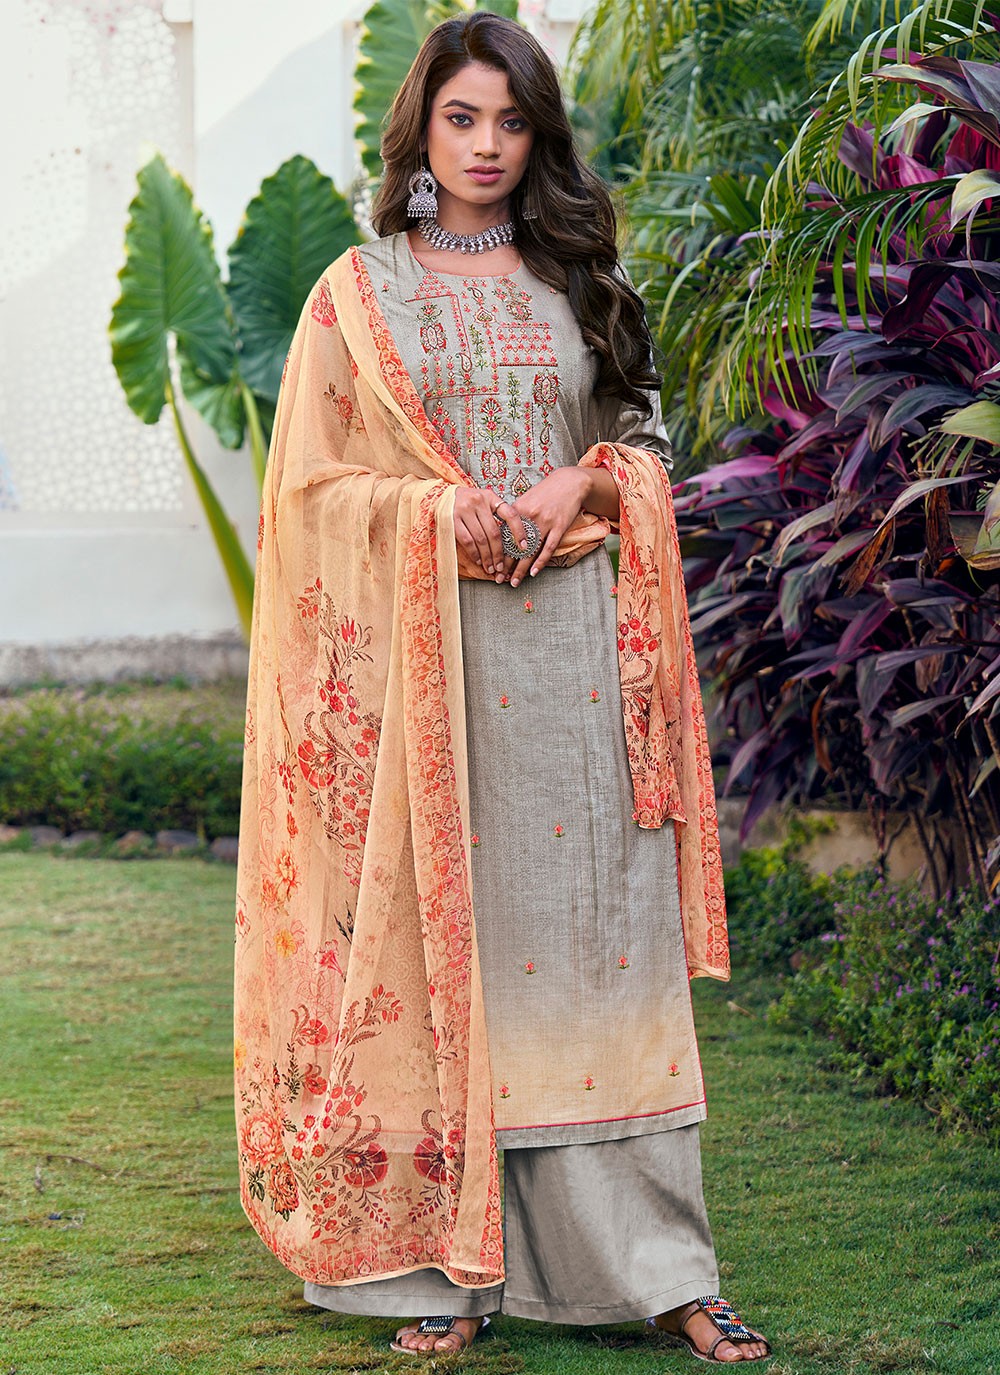 Cotton Casual Designer Pakistani Suit